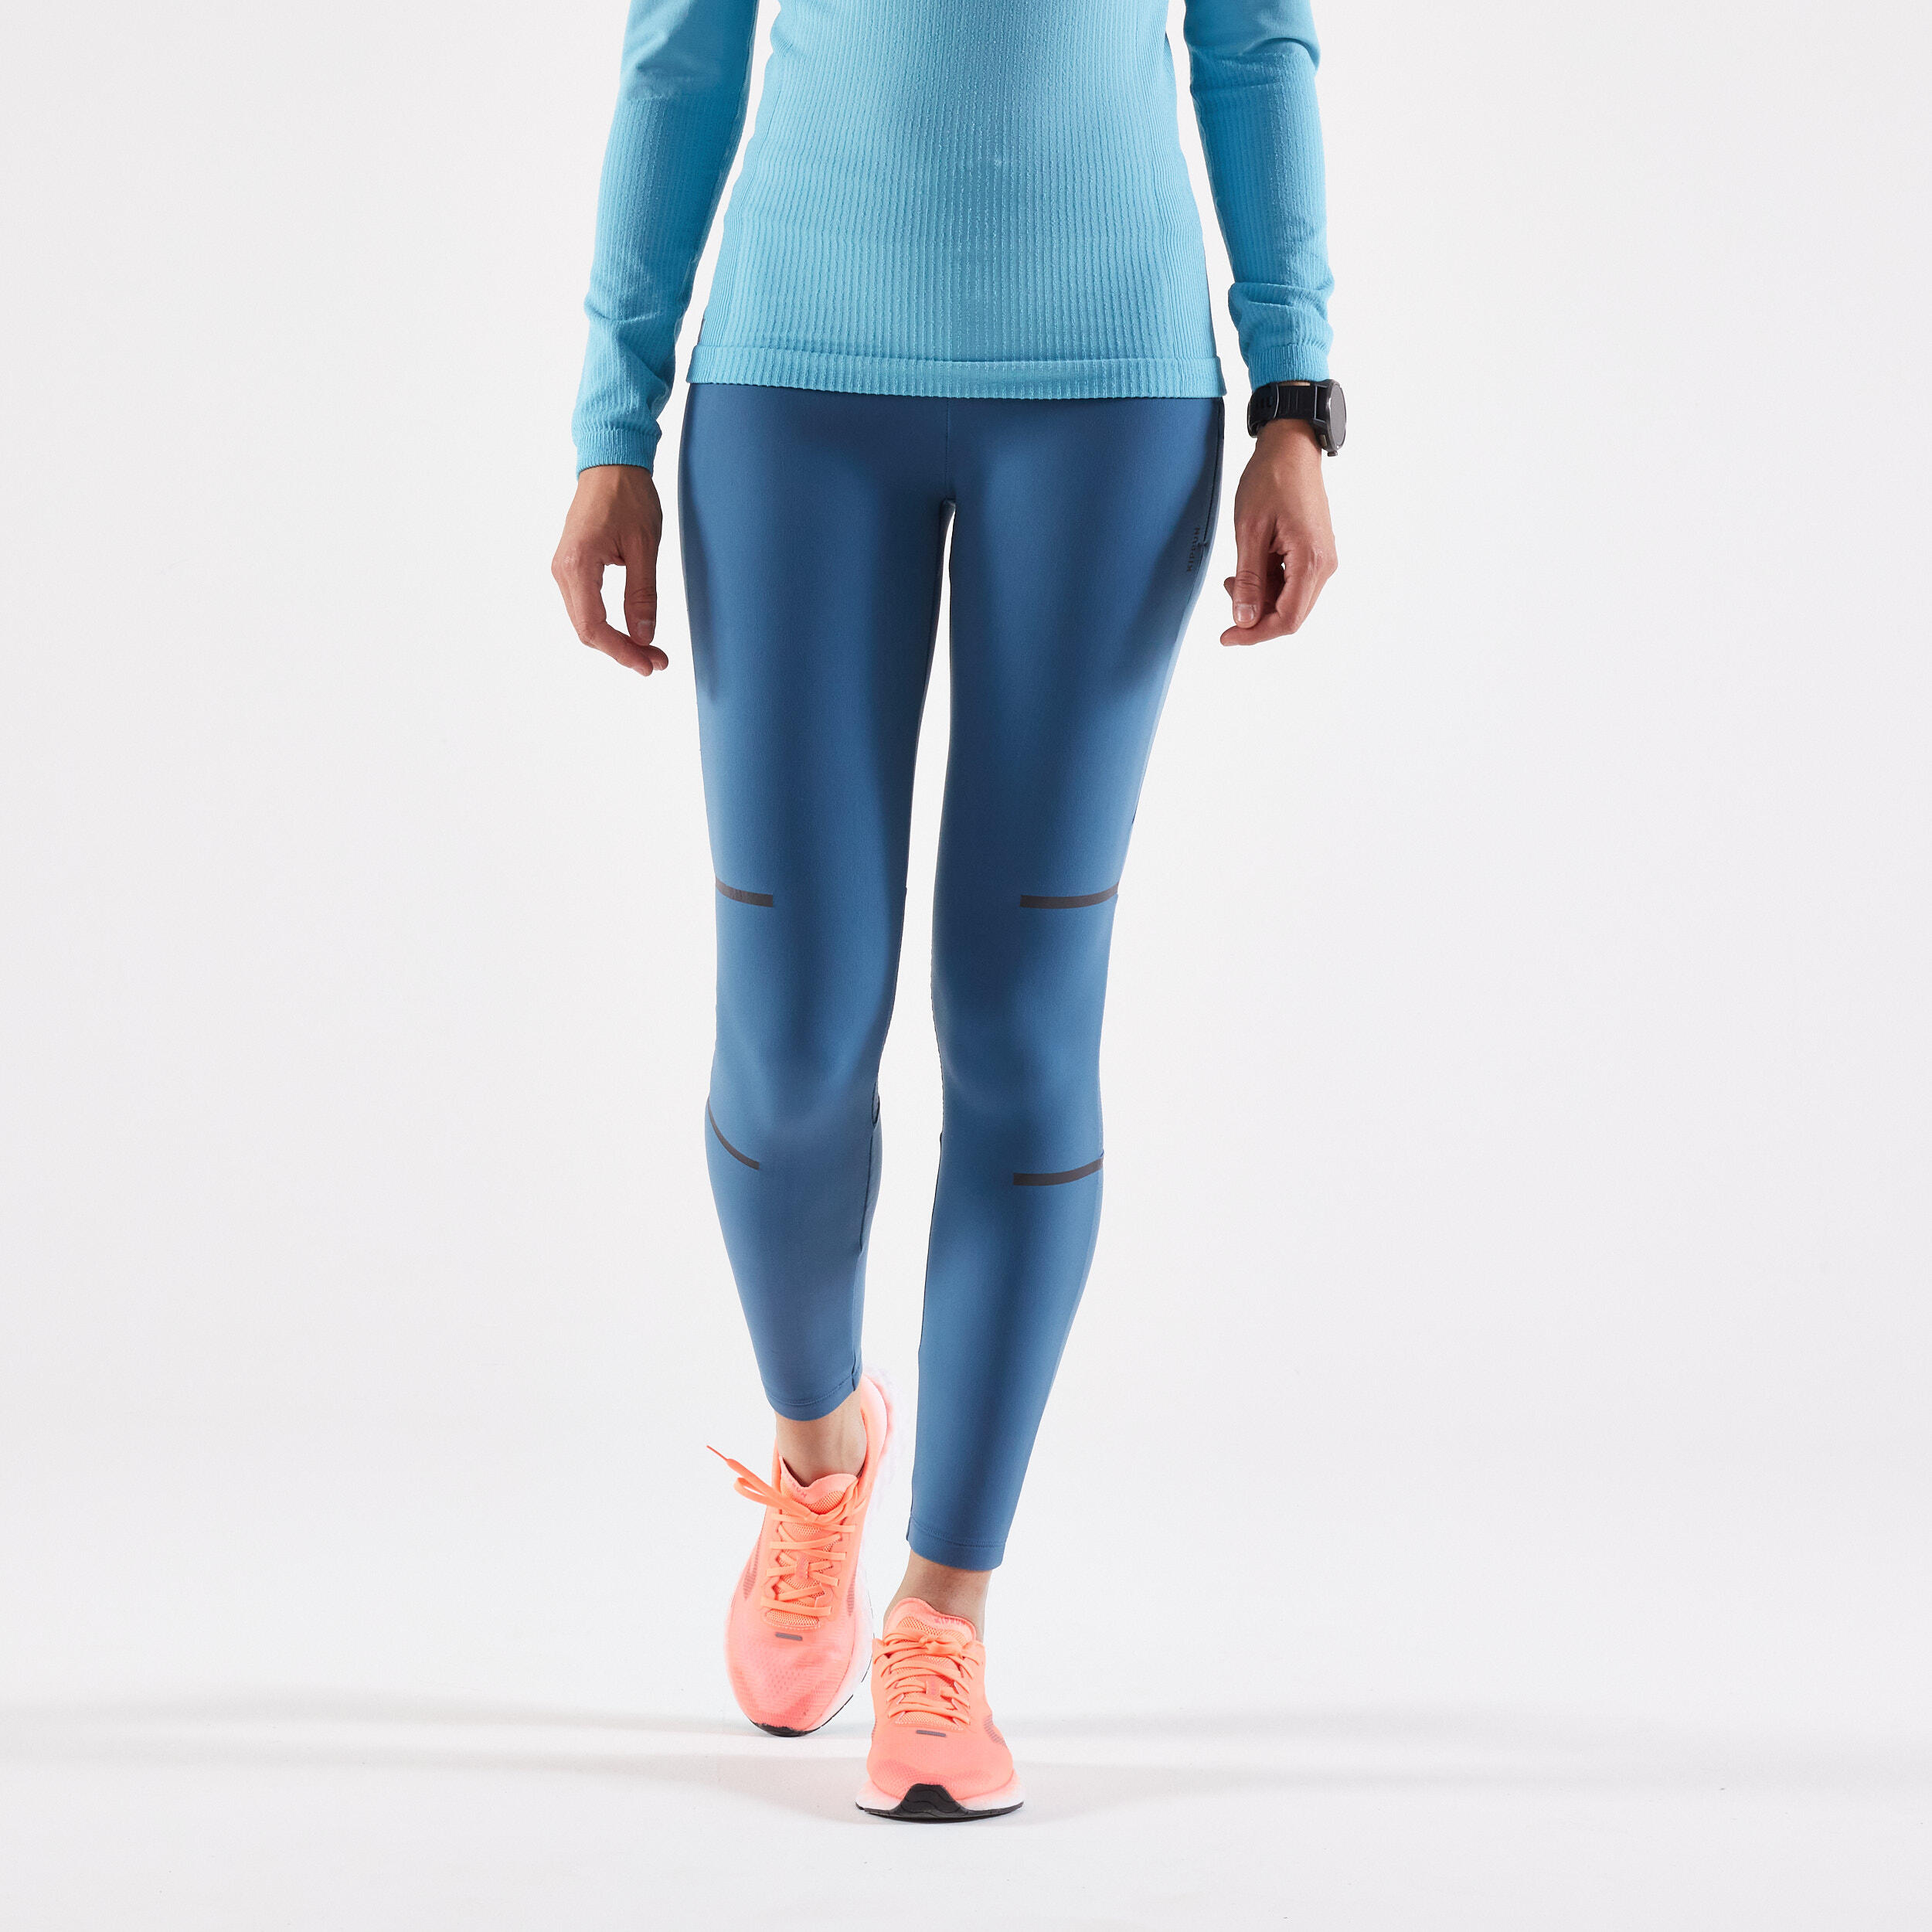 Decathlon Kiprun Warm Warm Running Tights - ShopStyle Trousers